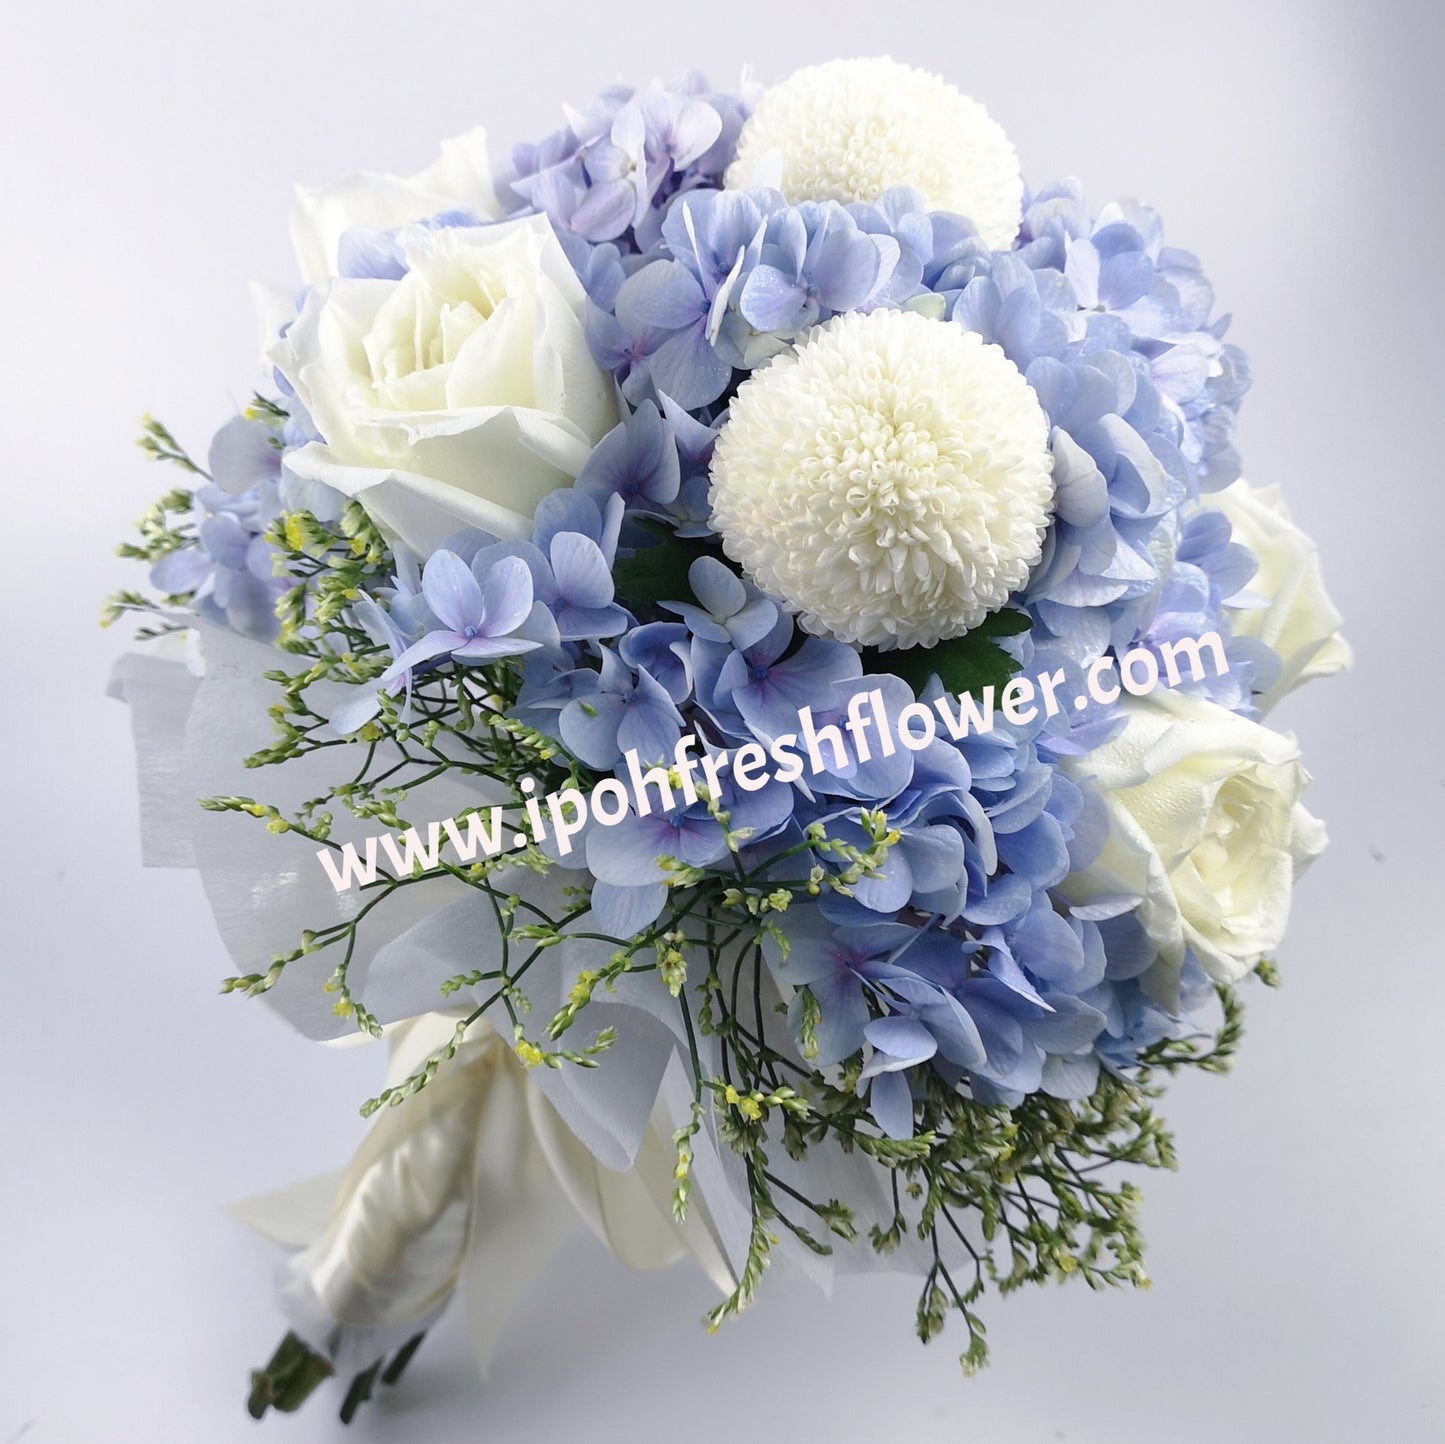 Hydrangea Flower Bouquet| Fresh Flower Bridal Bouquet| Ipoh Free Delivery| Ipohfreshflower.com